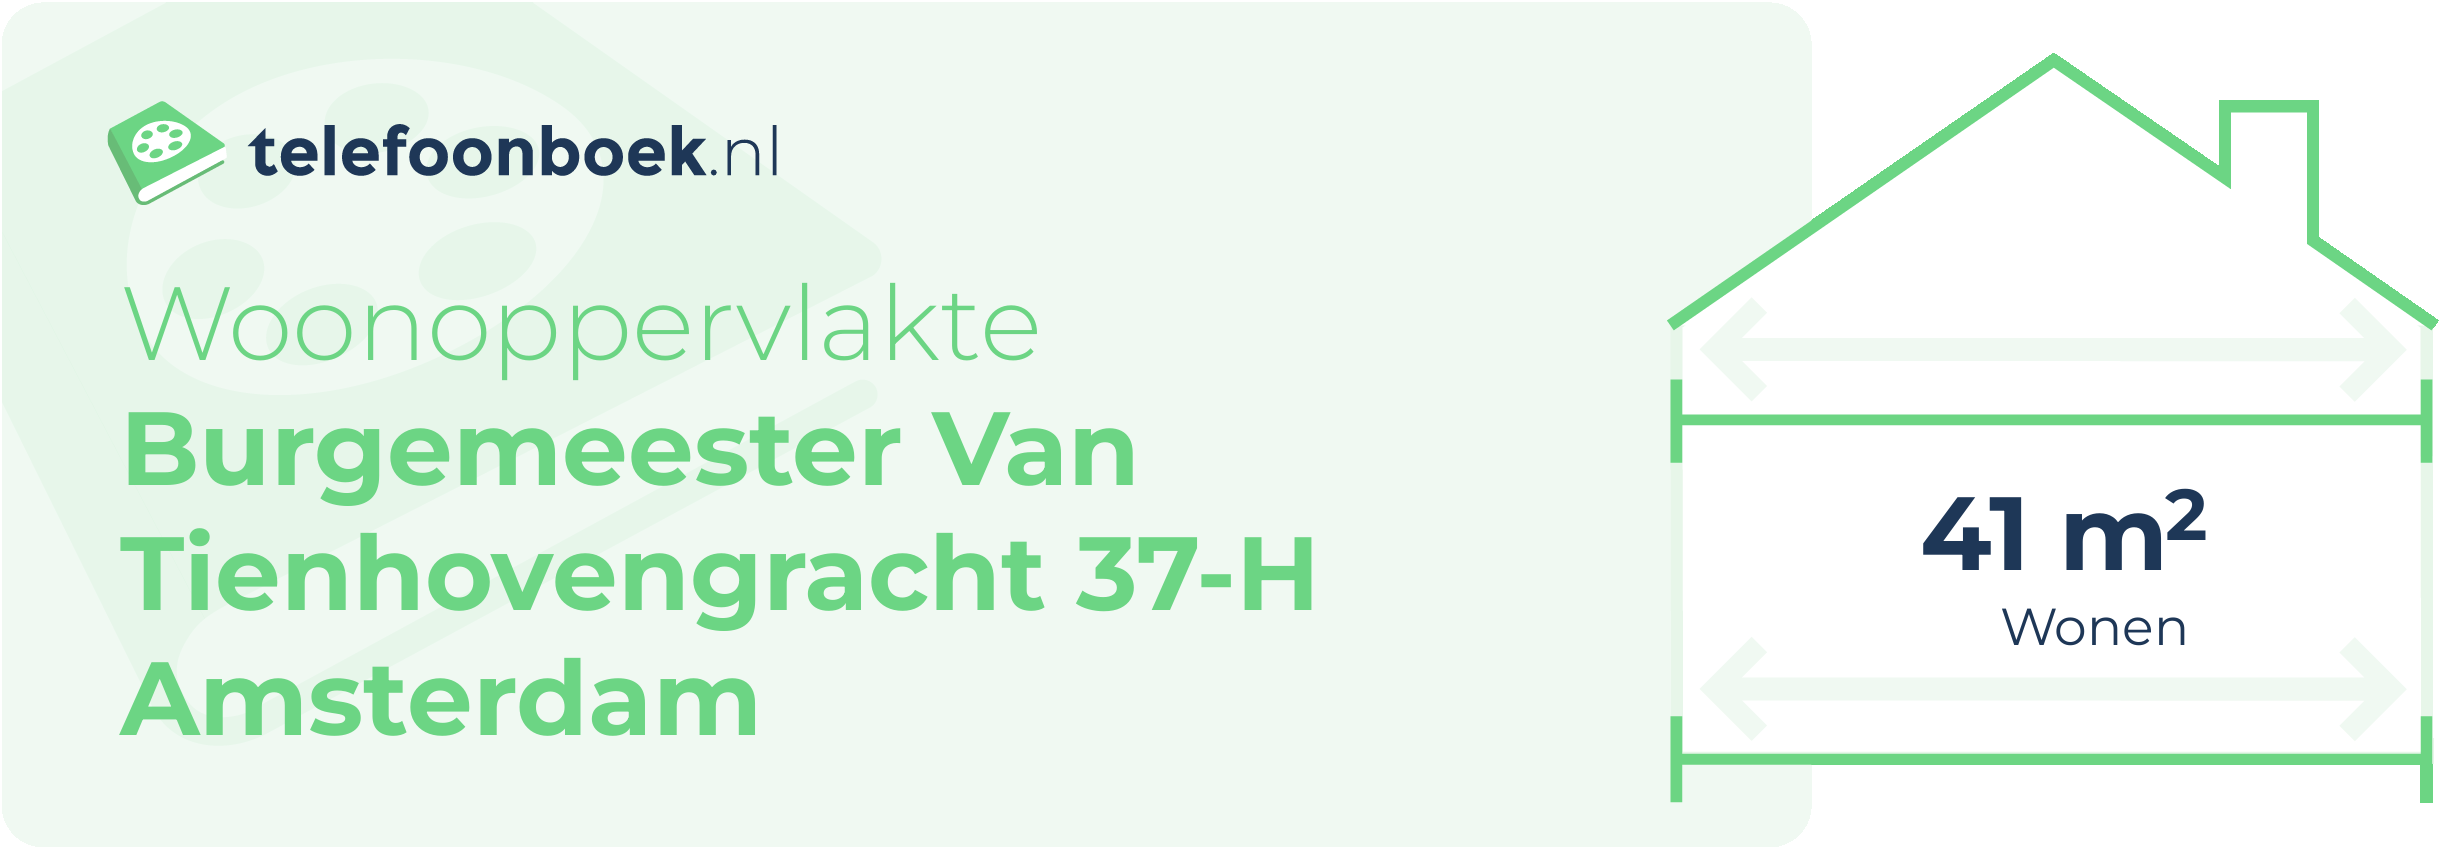 Woonoppervlakte Burgemeester Van Tienhovengracht 37-H Amsterdam